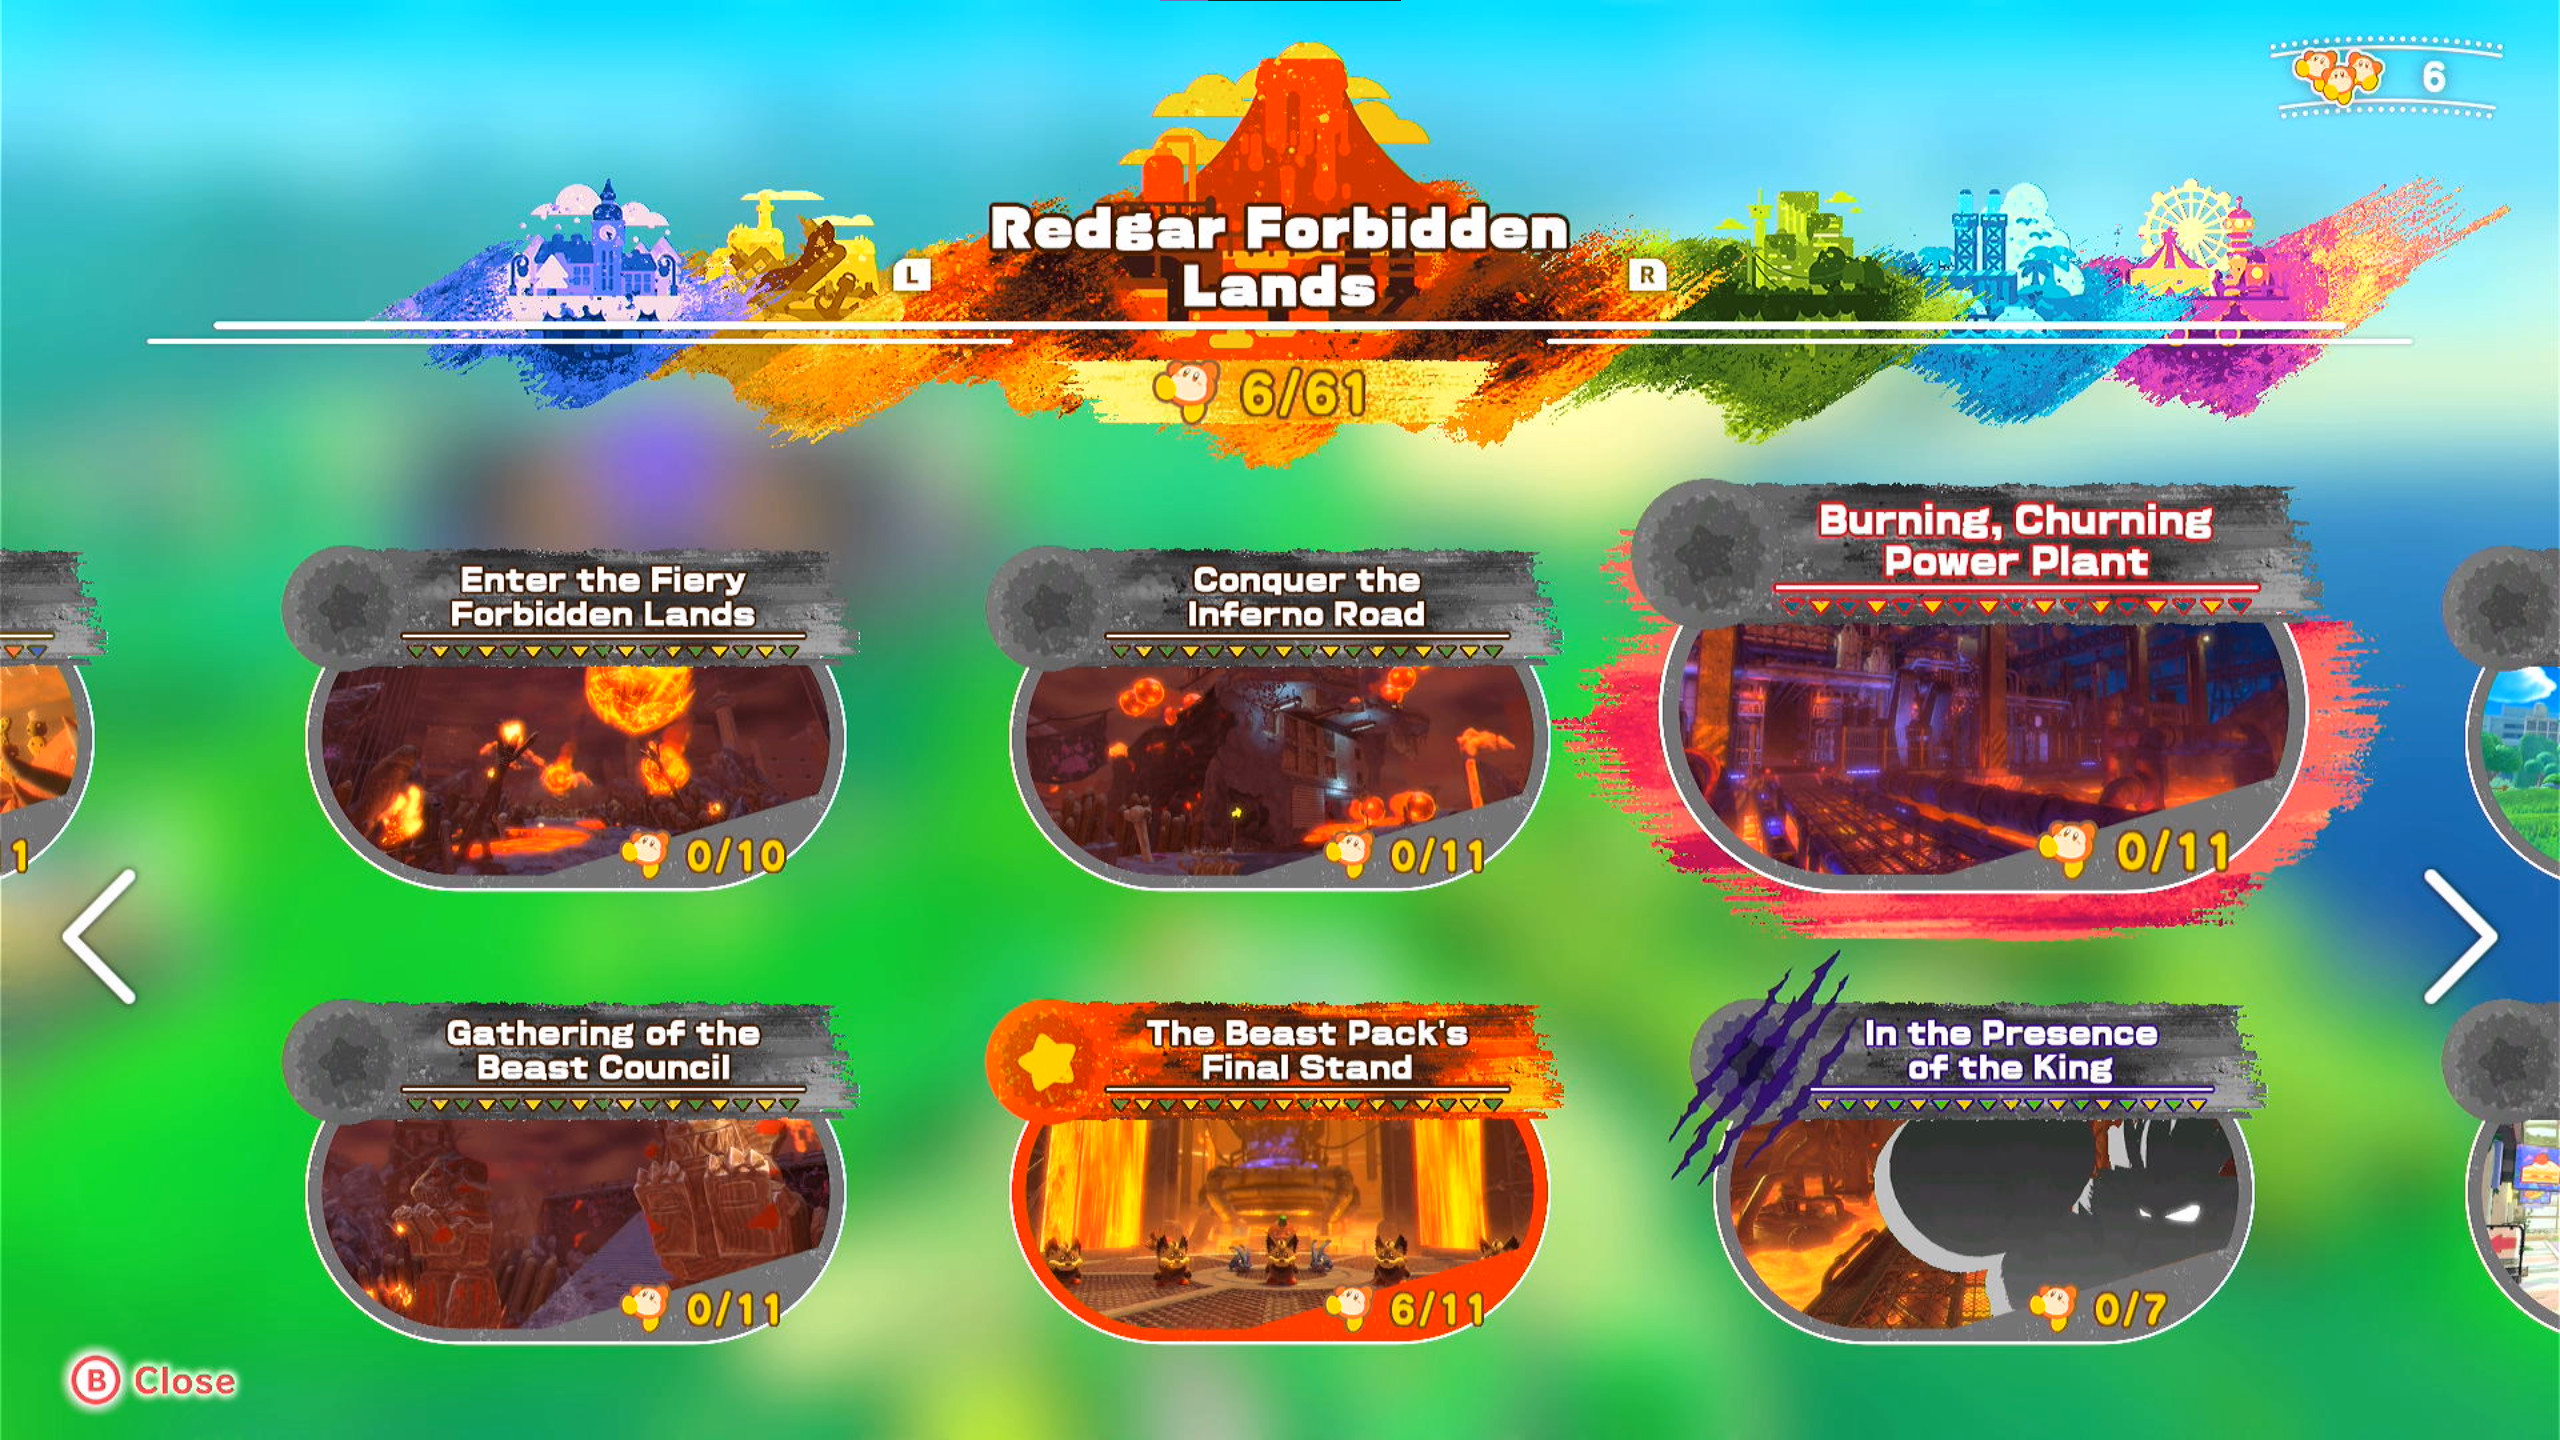 KFL Randomizer [Kirby and the Forgotten Land] [Mods]